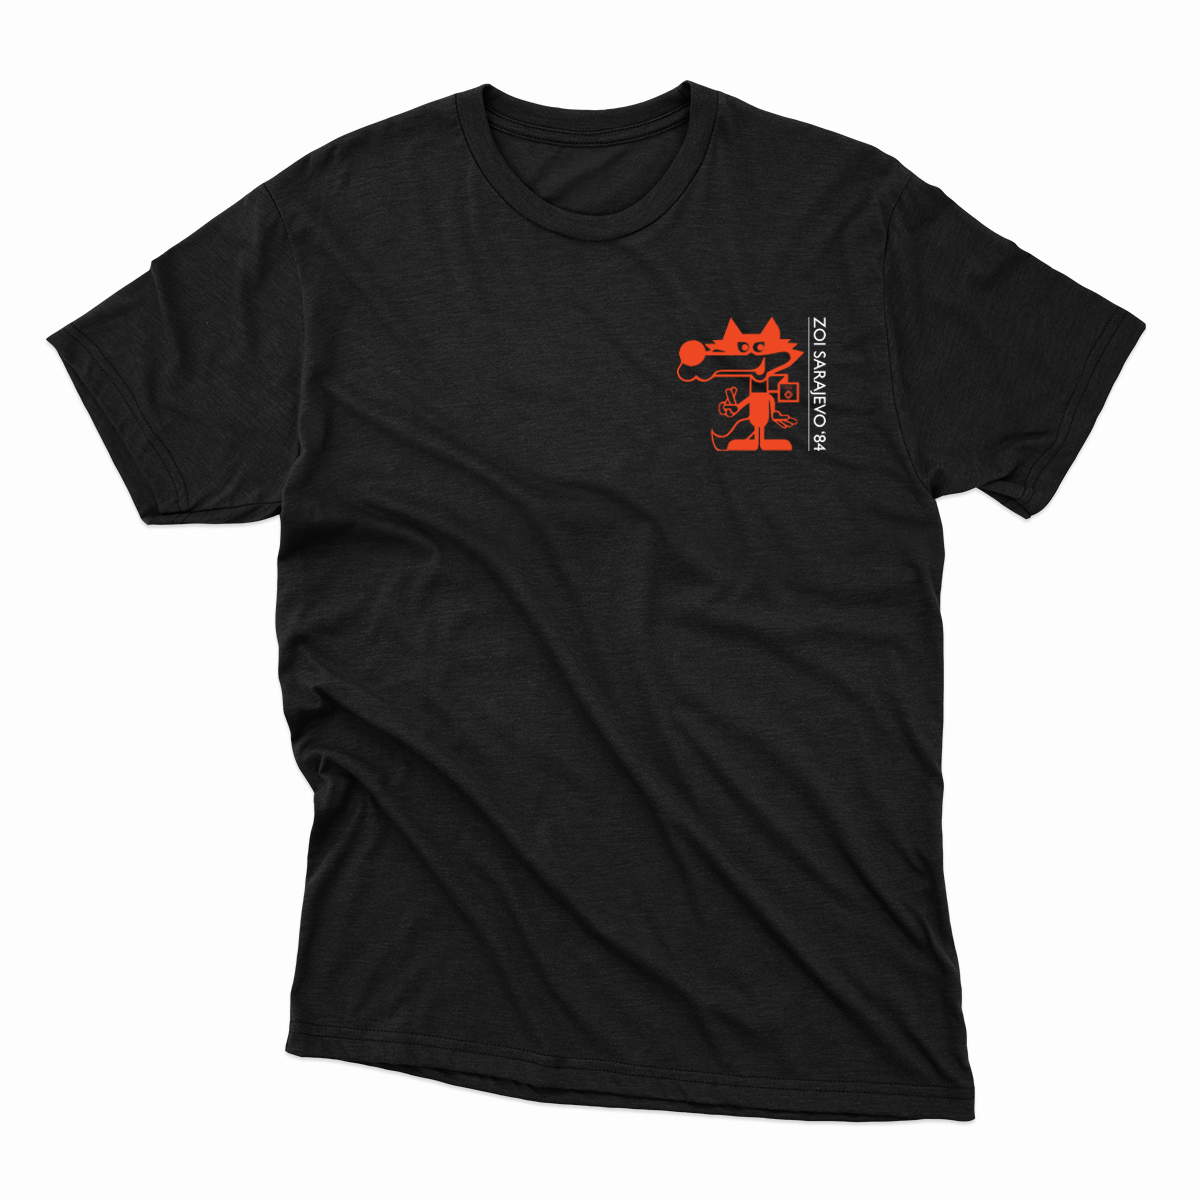 ZOI - Men's T-Shirt